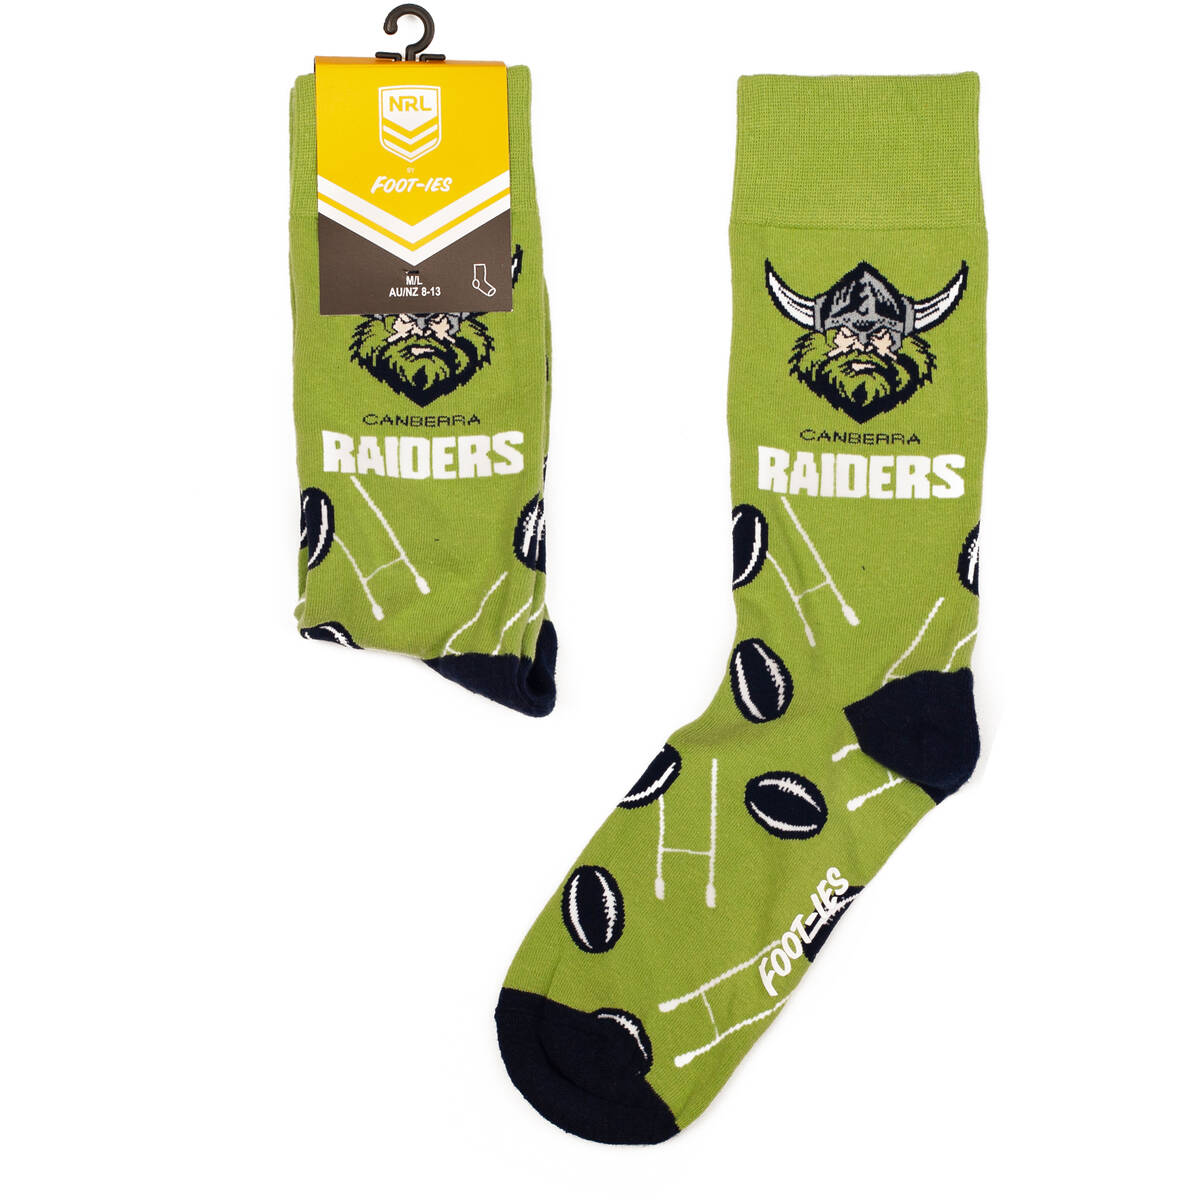 Raiders Foot-ies Goal Post Socks1